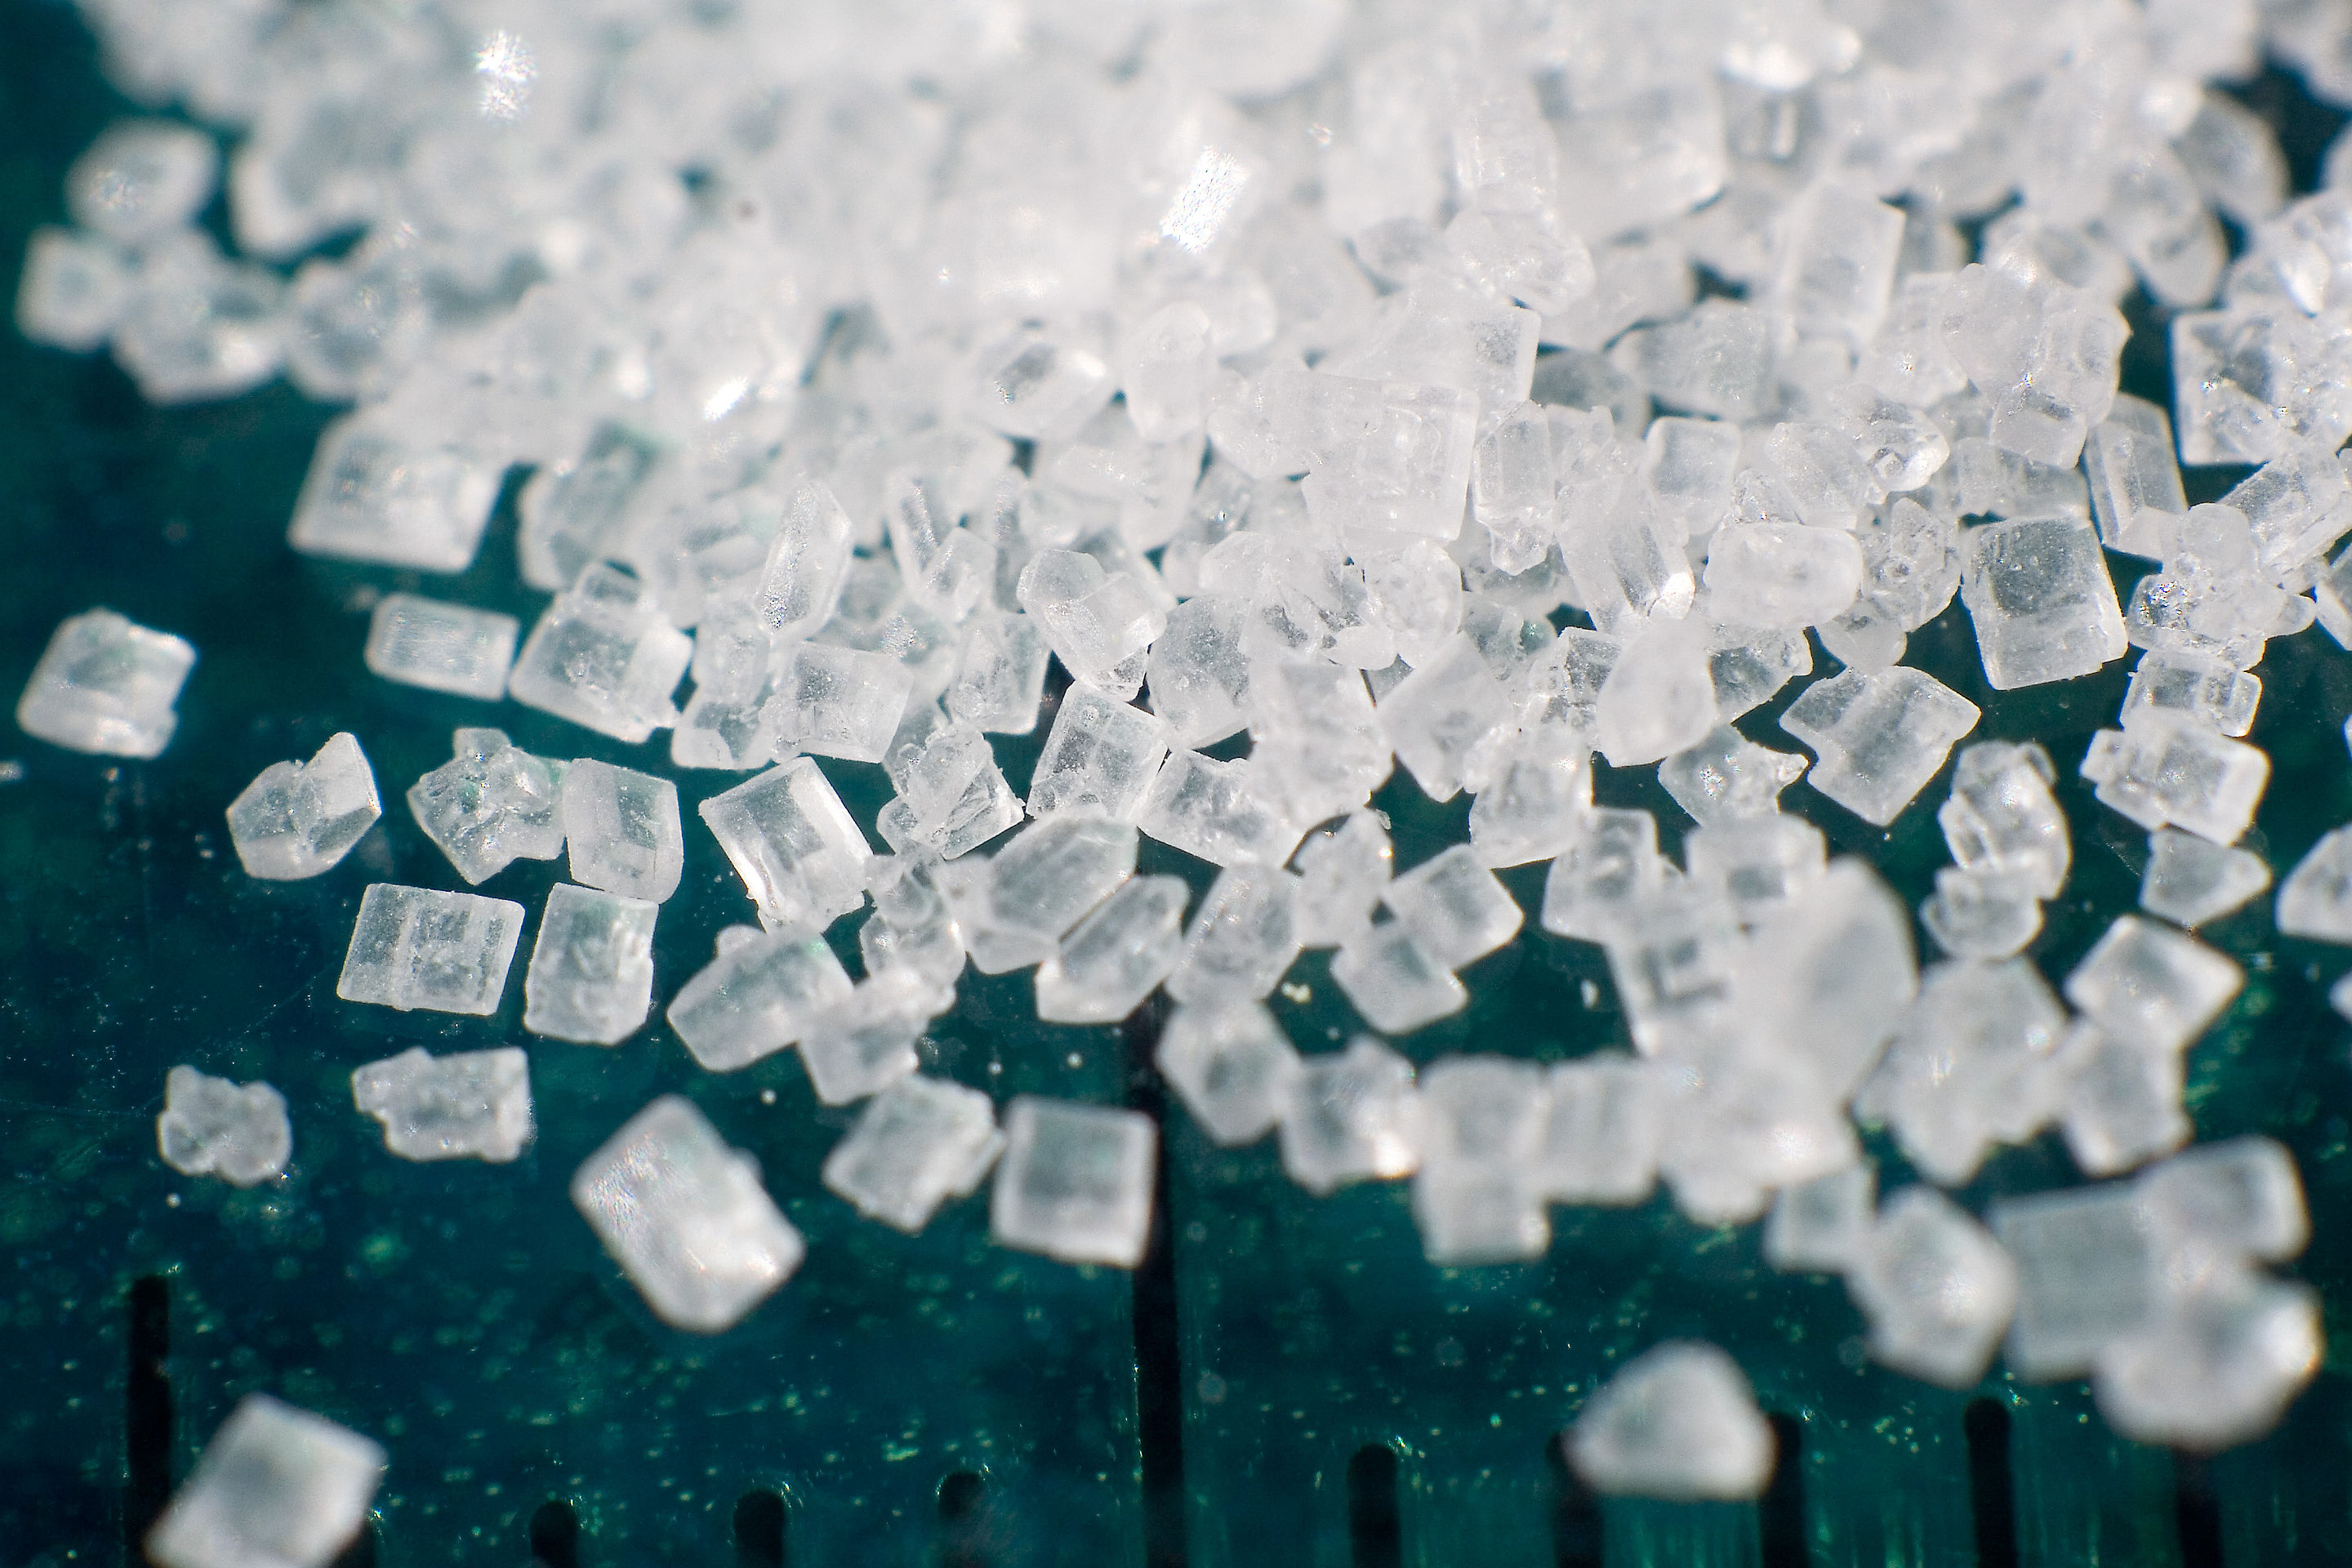 Sugar crystals magnified 